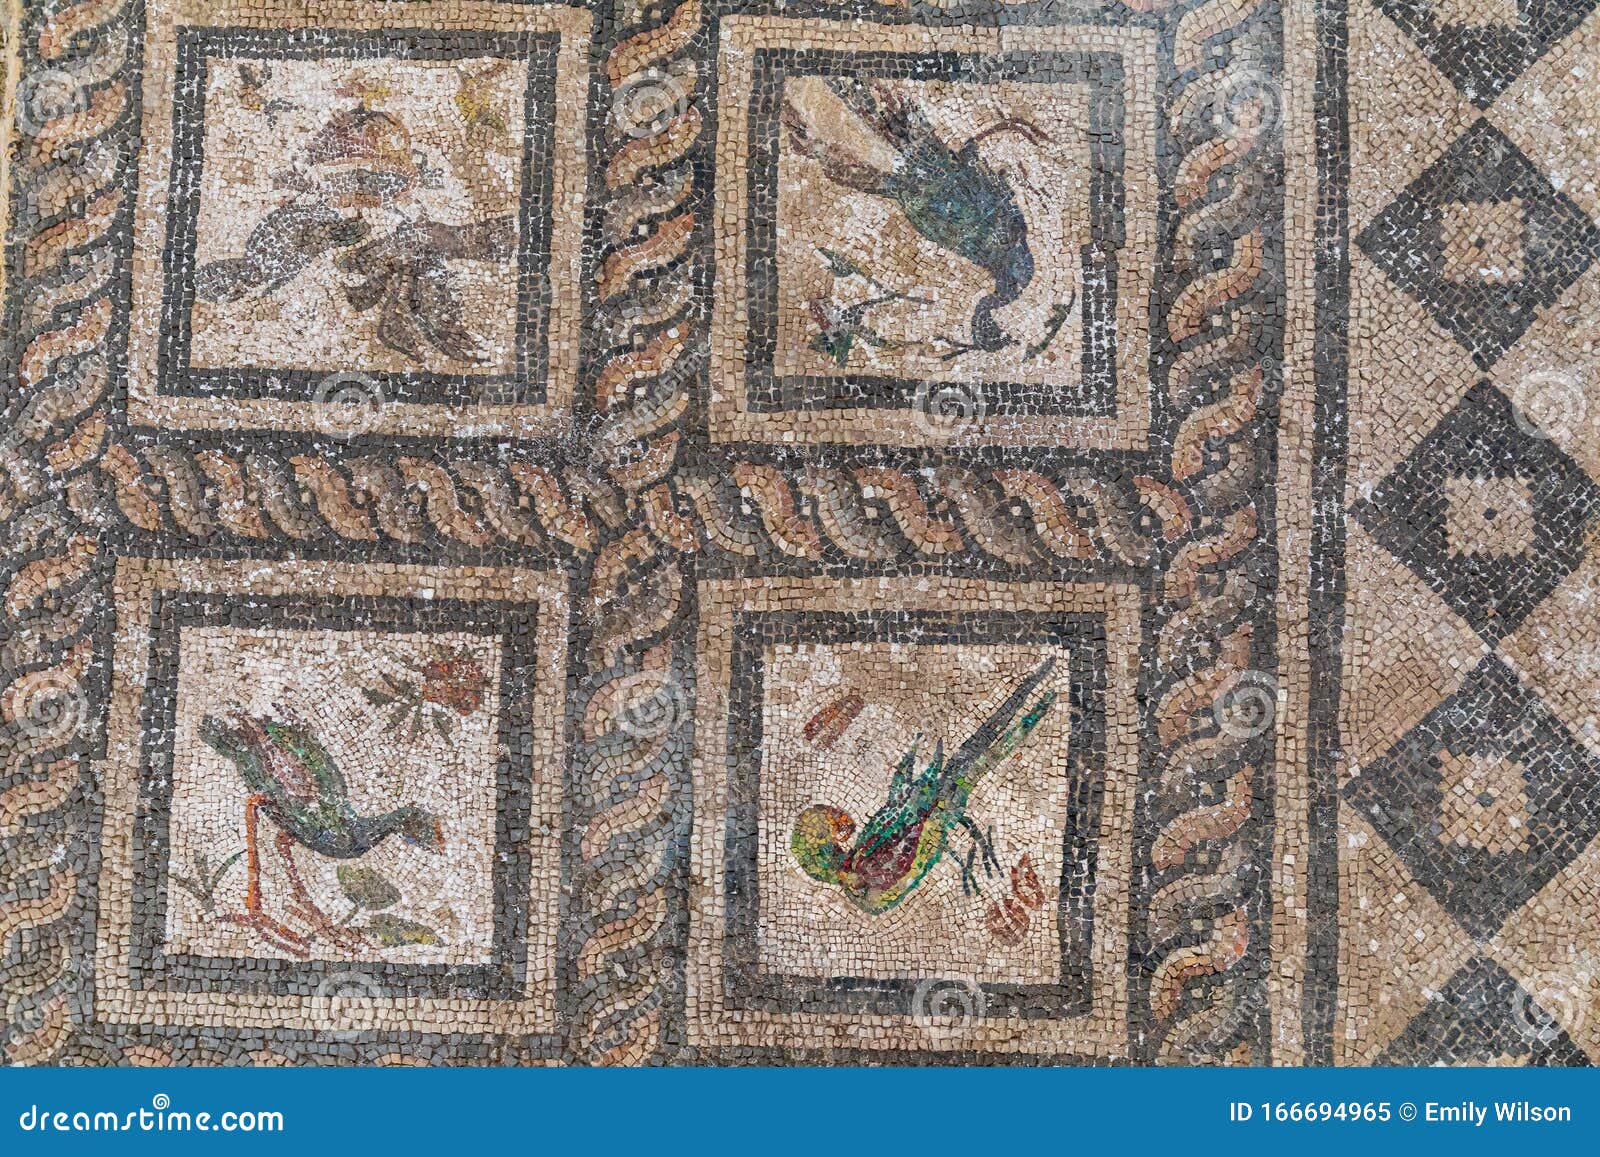 Mosaic Tile Flooring From Villa Of The Birds